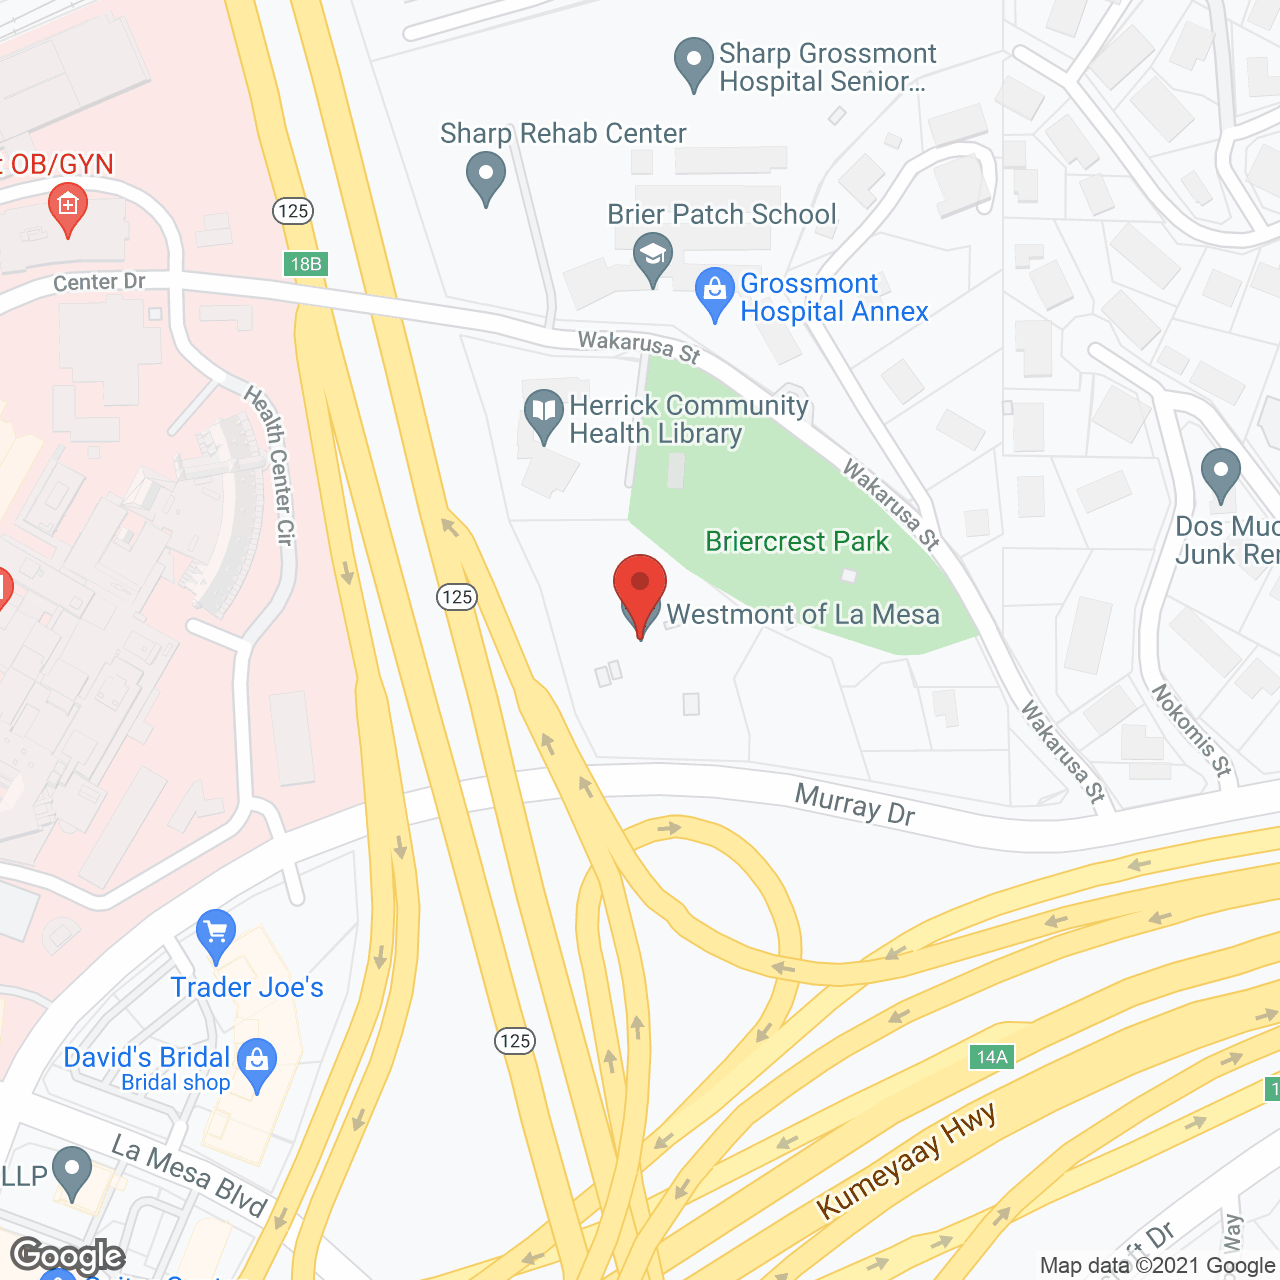 Westmont of La Mesa in google map